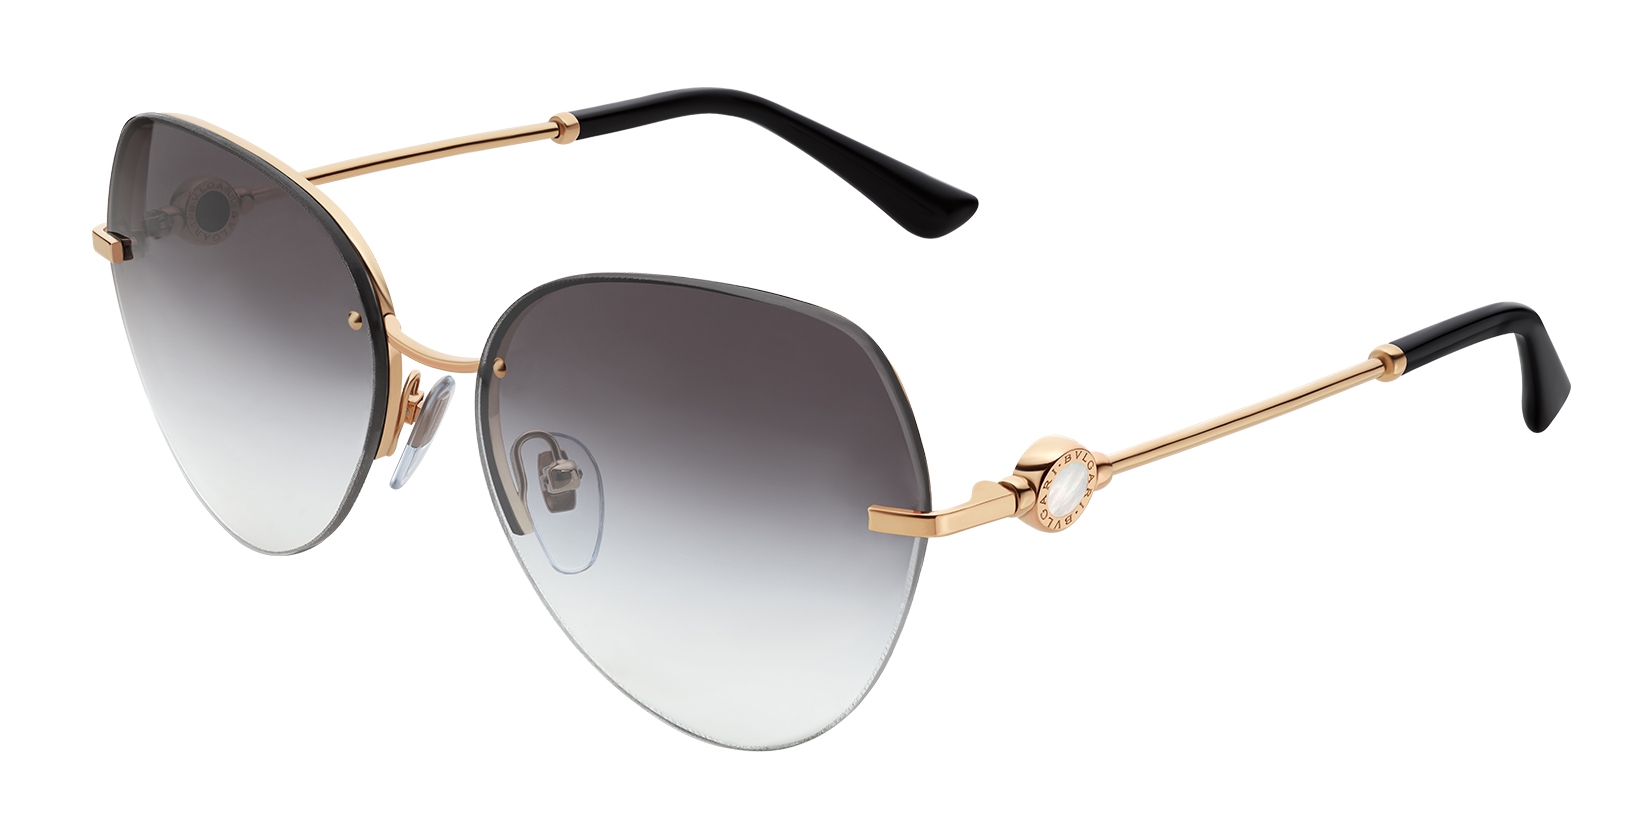 bvlgari sunglasses 2015 collection